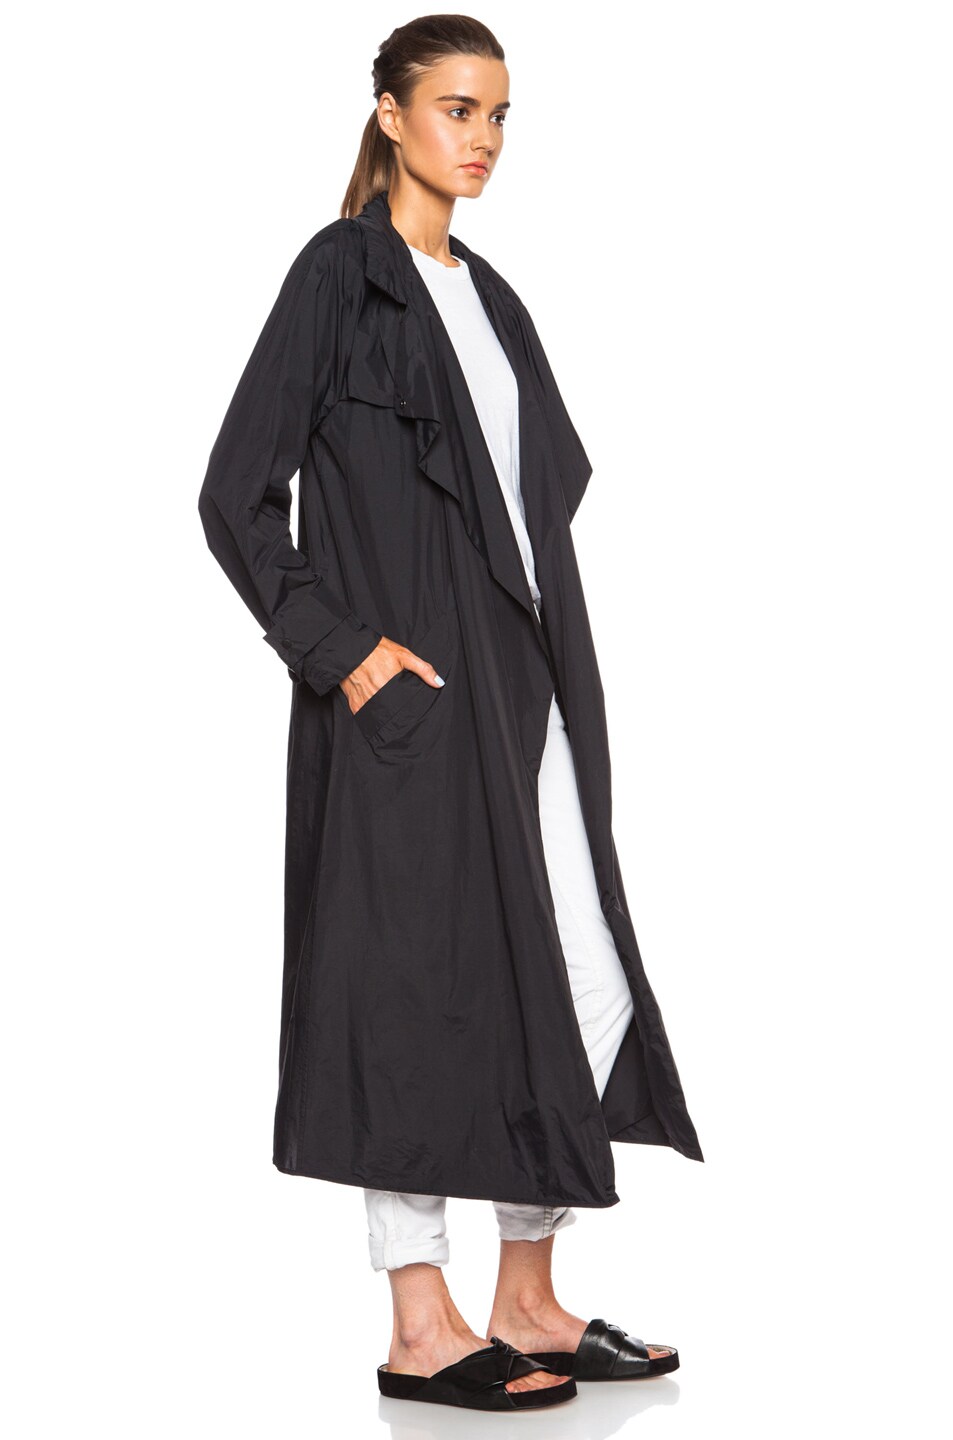 Isabel Marant Garnett Nylon Rain Coat in Black | FWRD